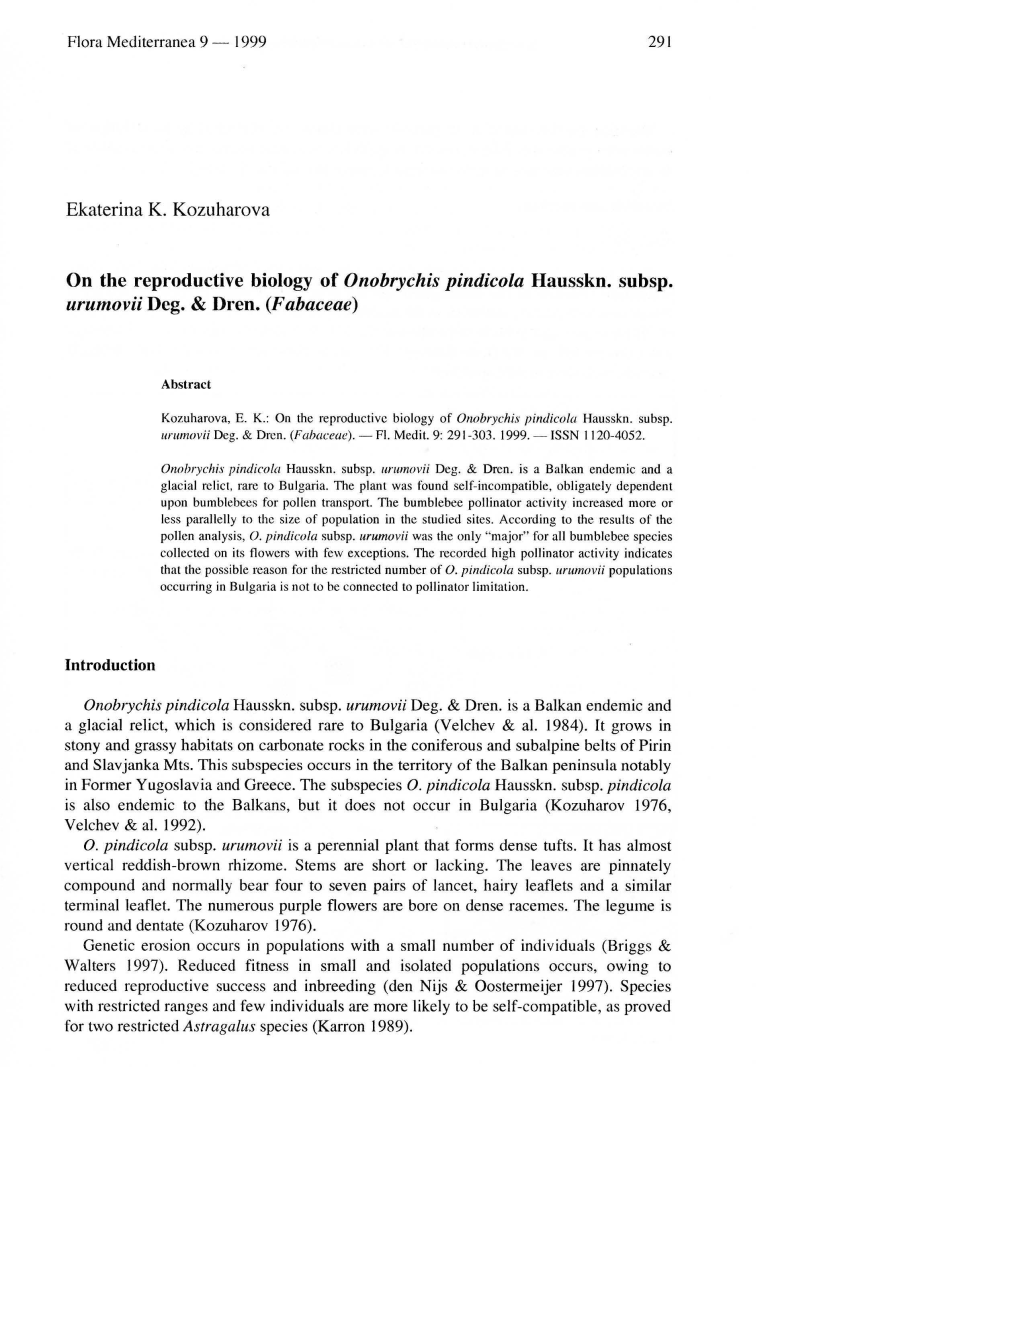 Ekaterina K. Kozuharova on the Reproductive Biology of Onobrychis Pindicola Hausskn. Subsp. Urumovii Deg. & Dren. (F Abaceae